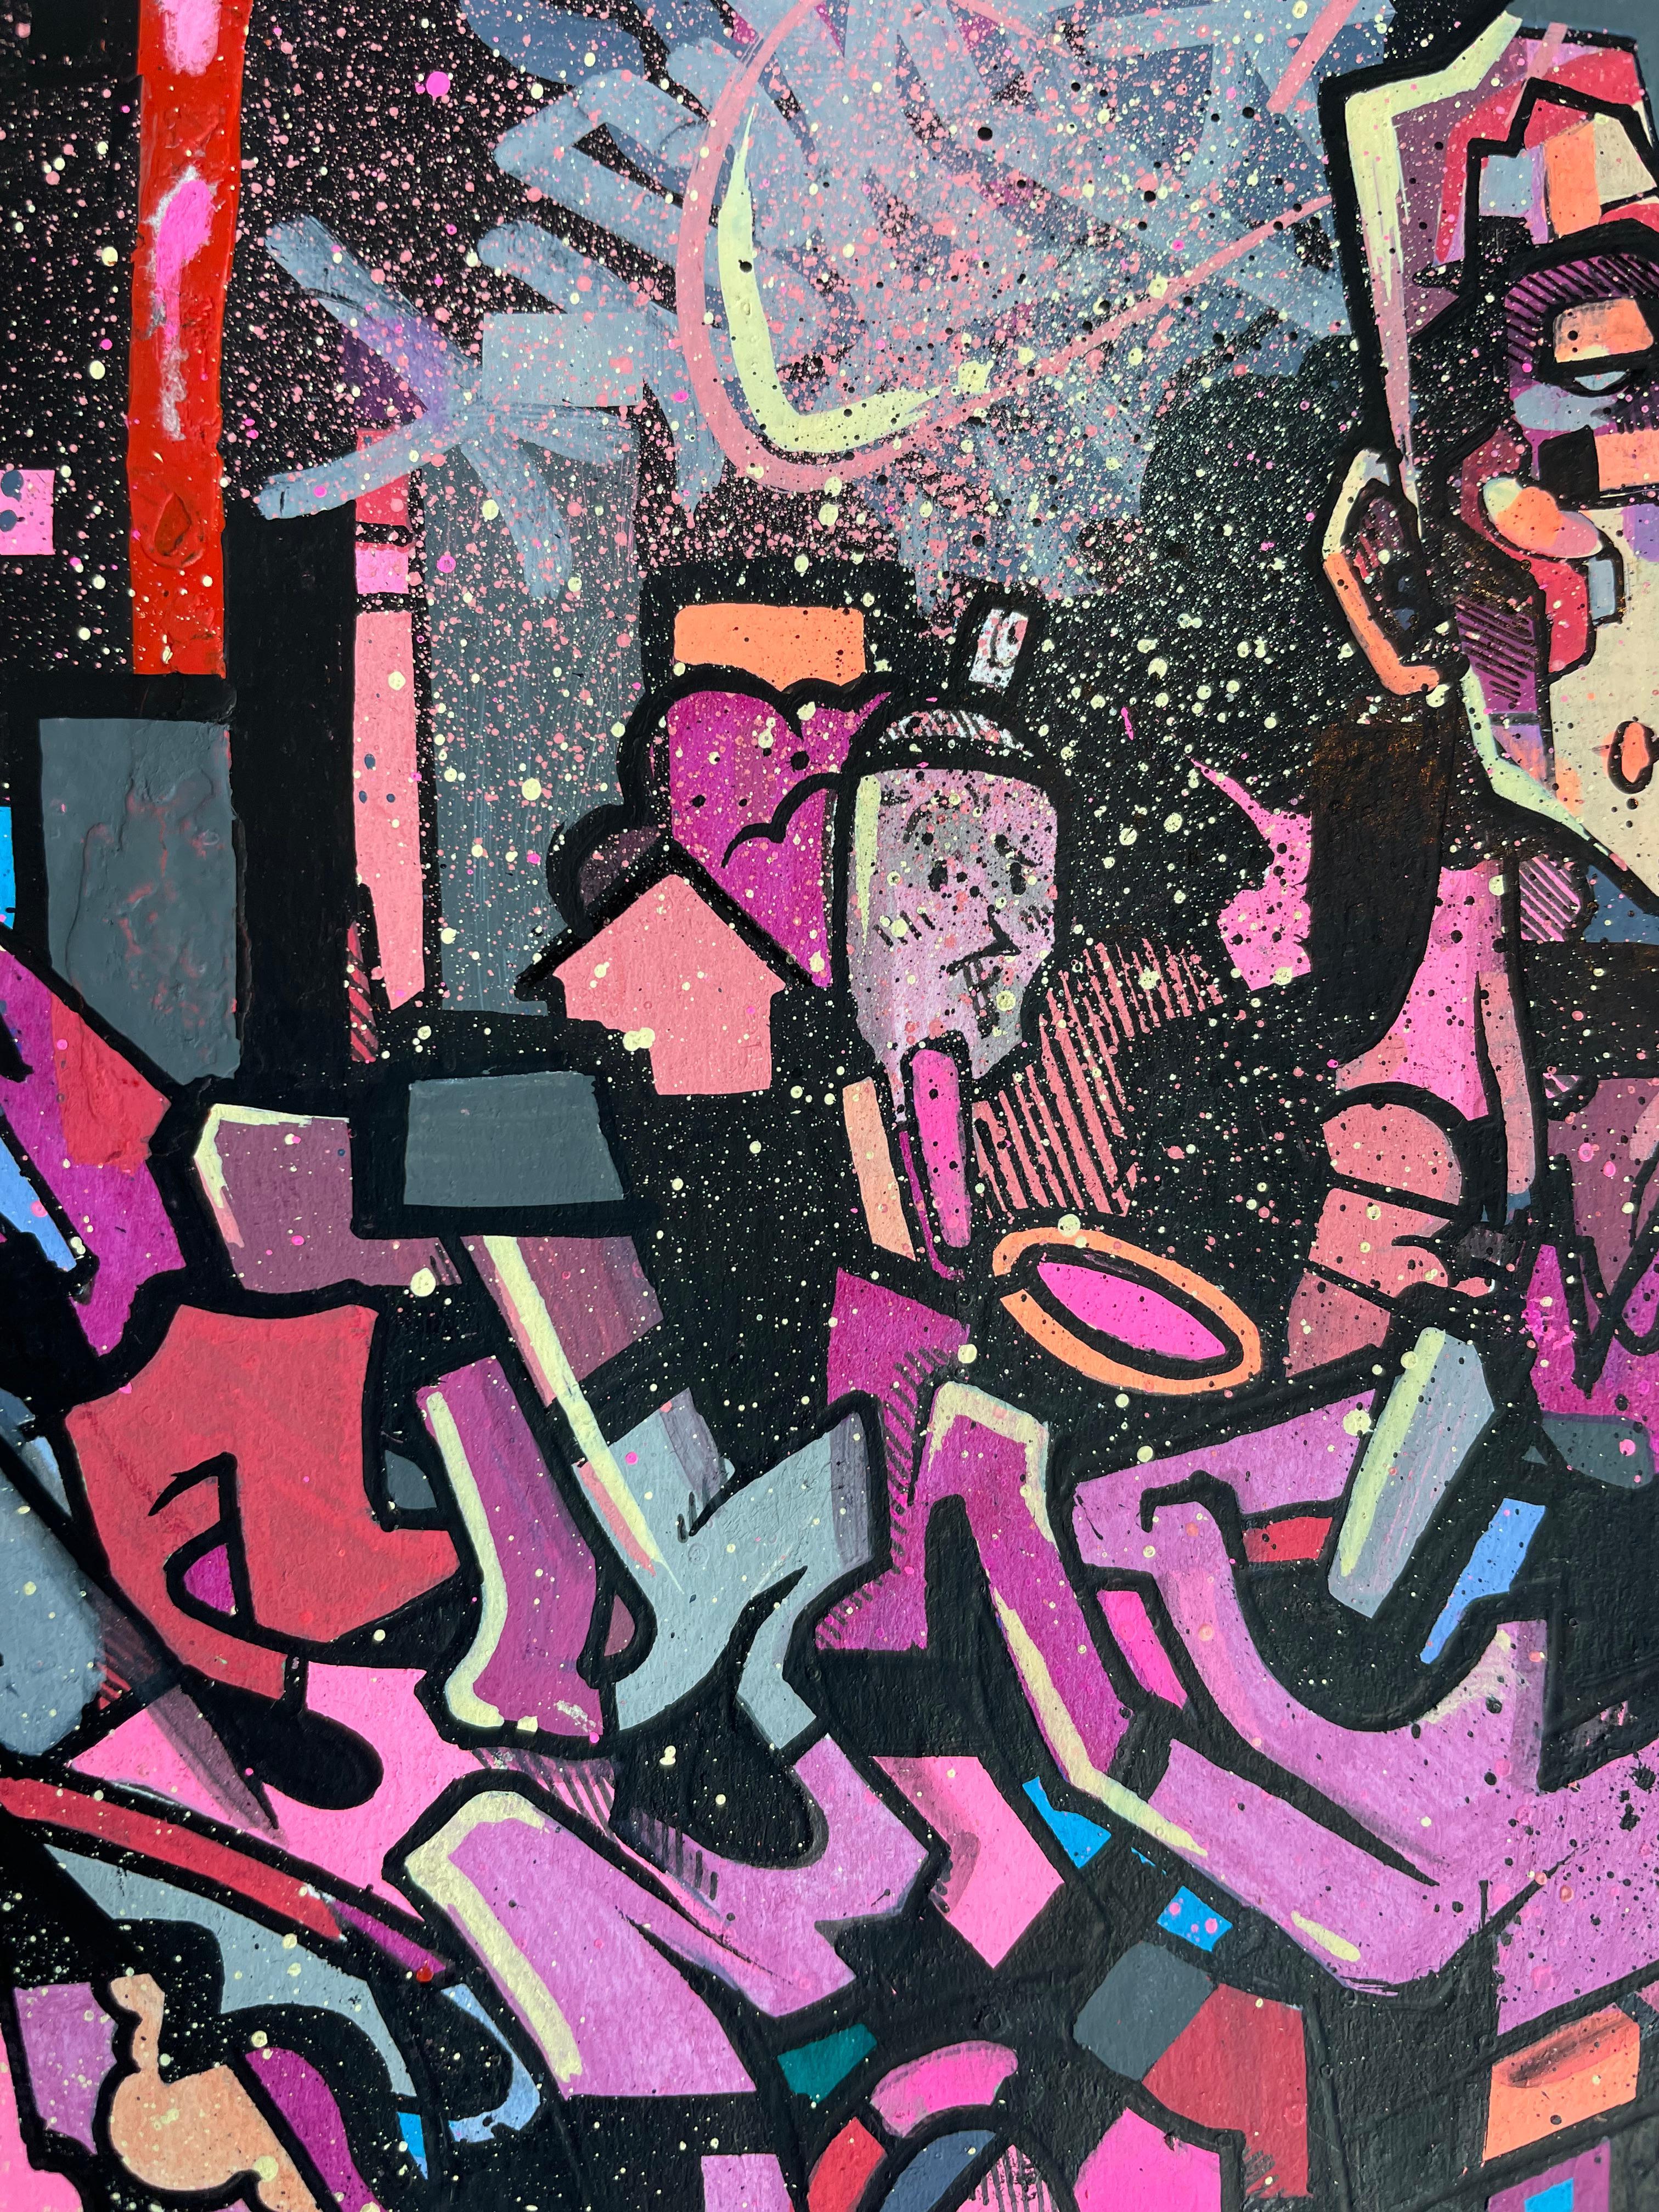 SHENANIGANS - Small colorful graffiti art on paper - Black Figurative Painting by Ian Sullivan